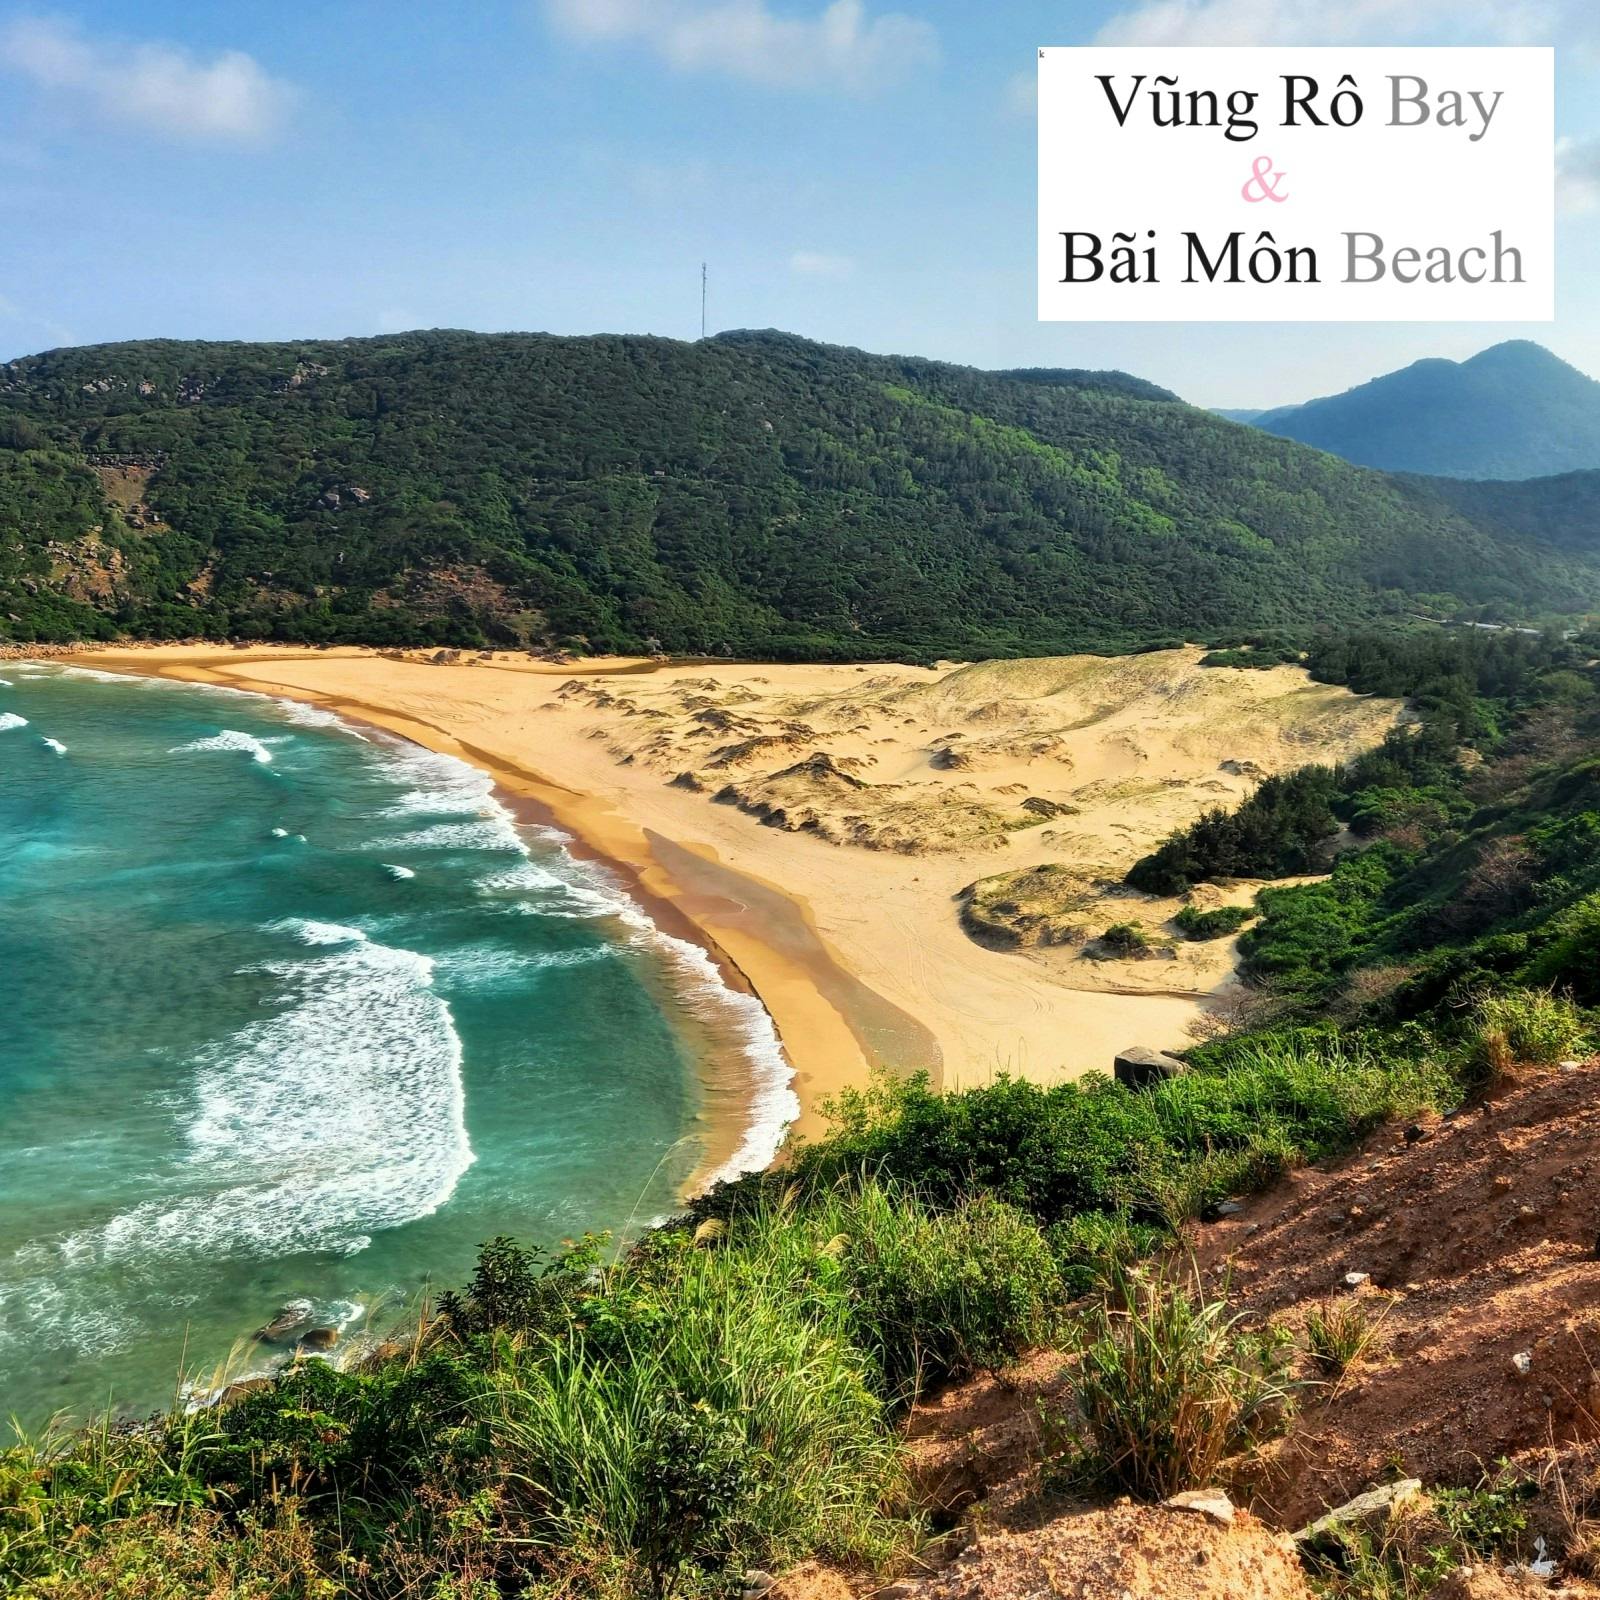 Vung Ro Bay and Bai Mon Beach, Phu Yen, Vietnam